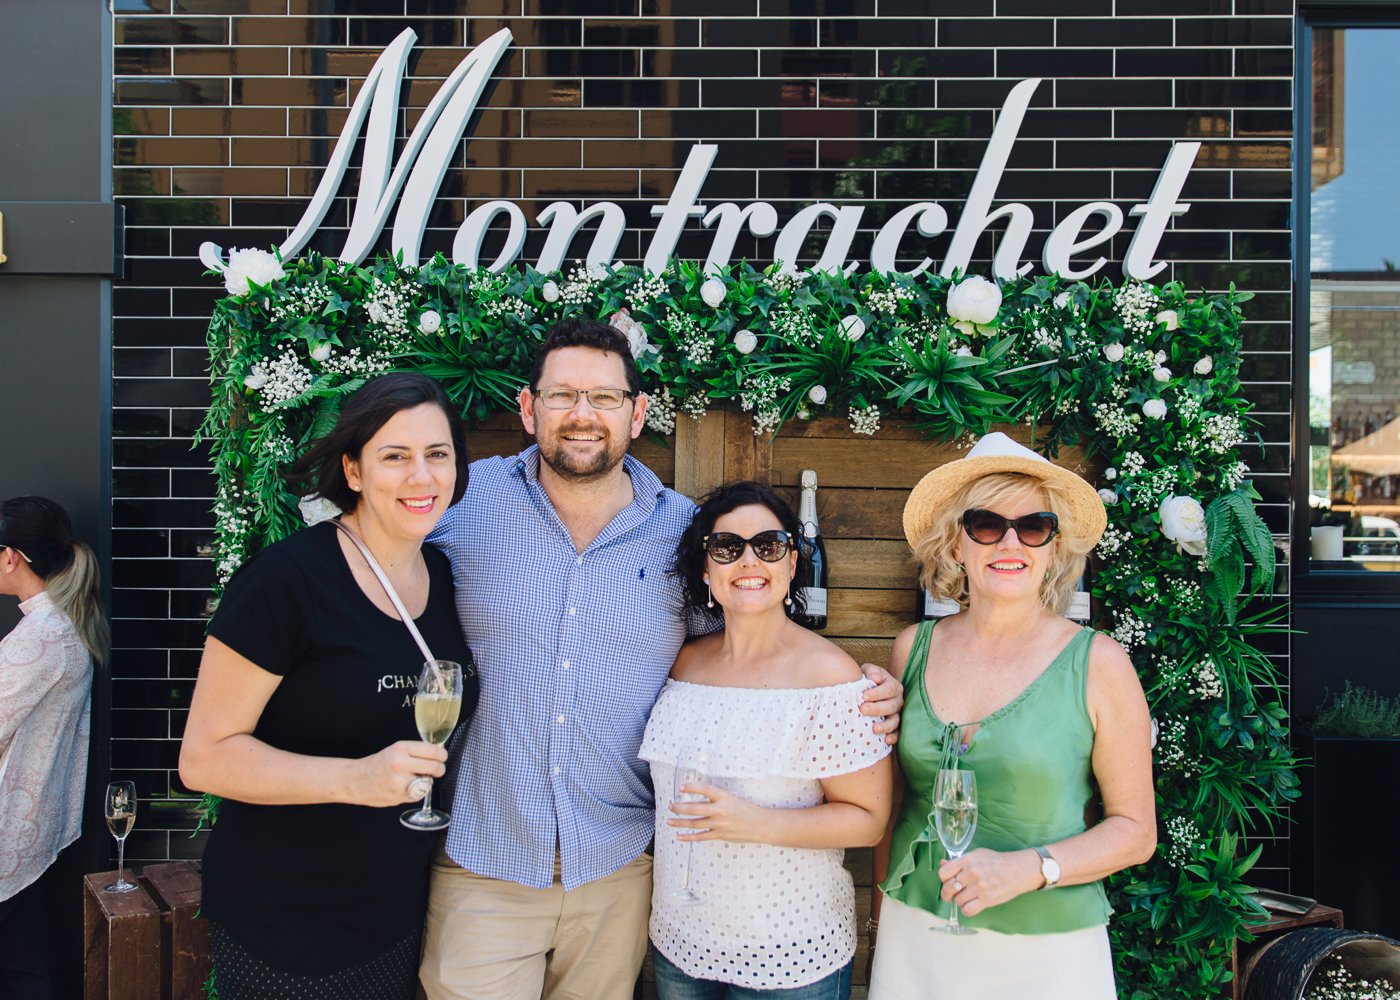 Montrachet&#8217;s Champagne Laneway